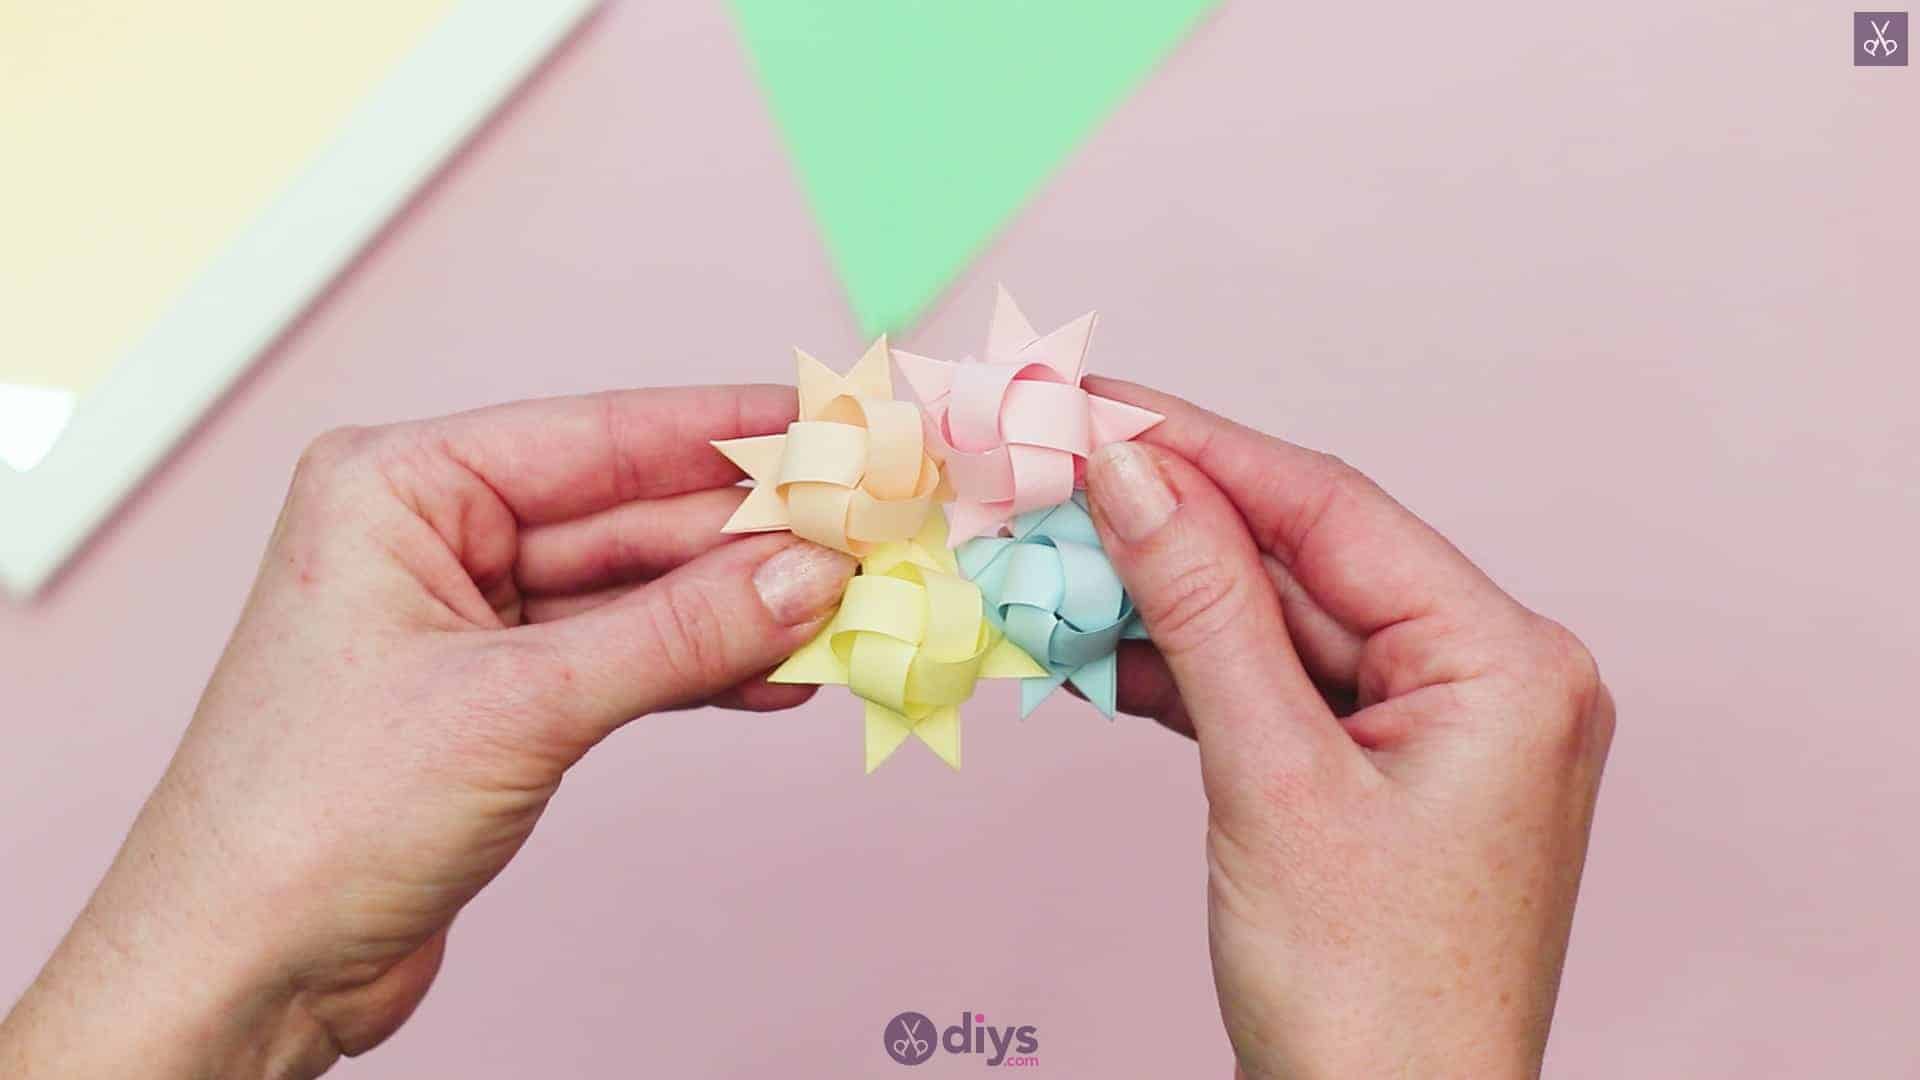 Diy origami flower art step 9d